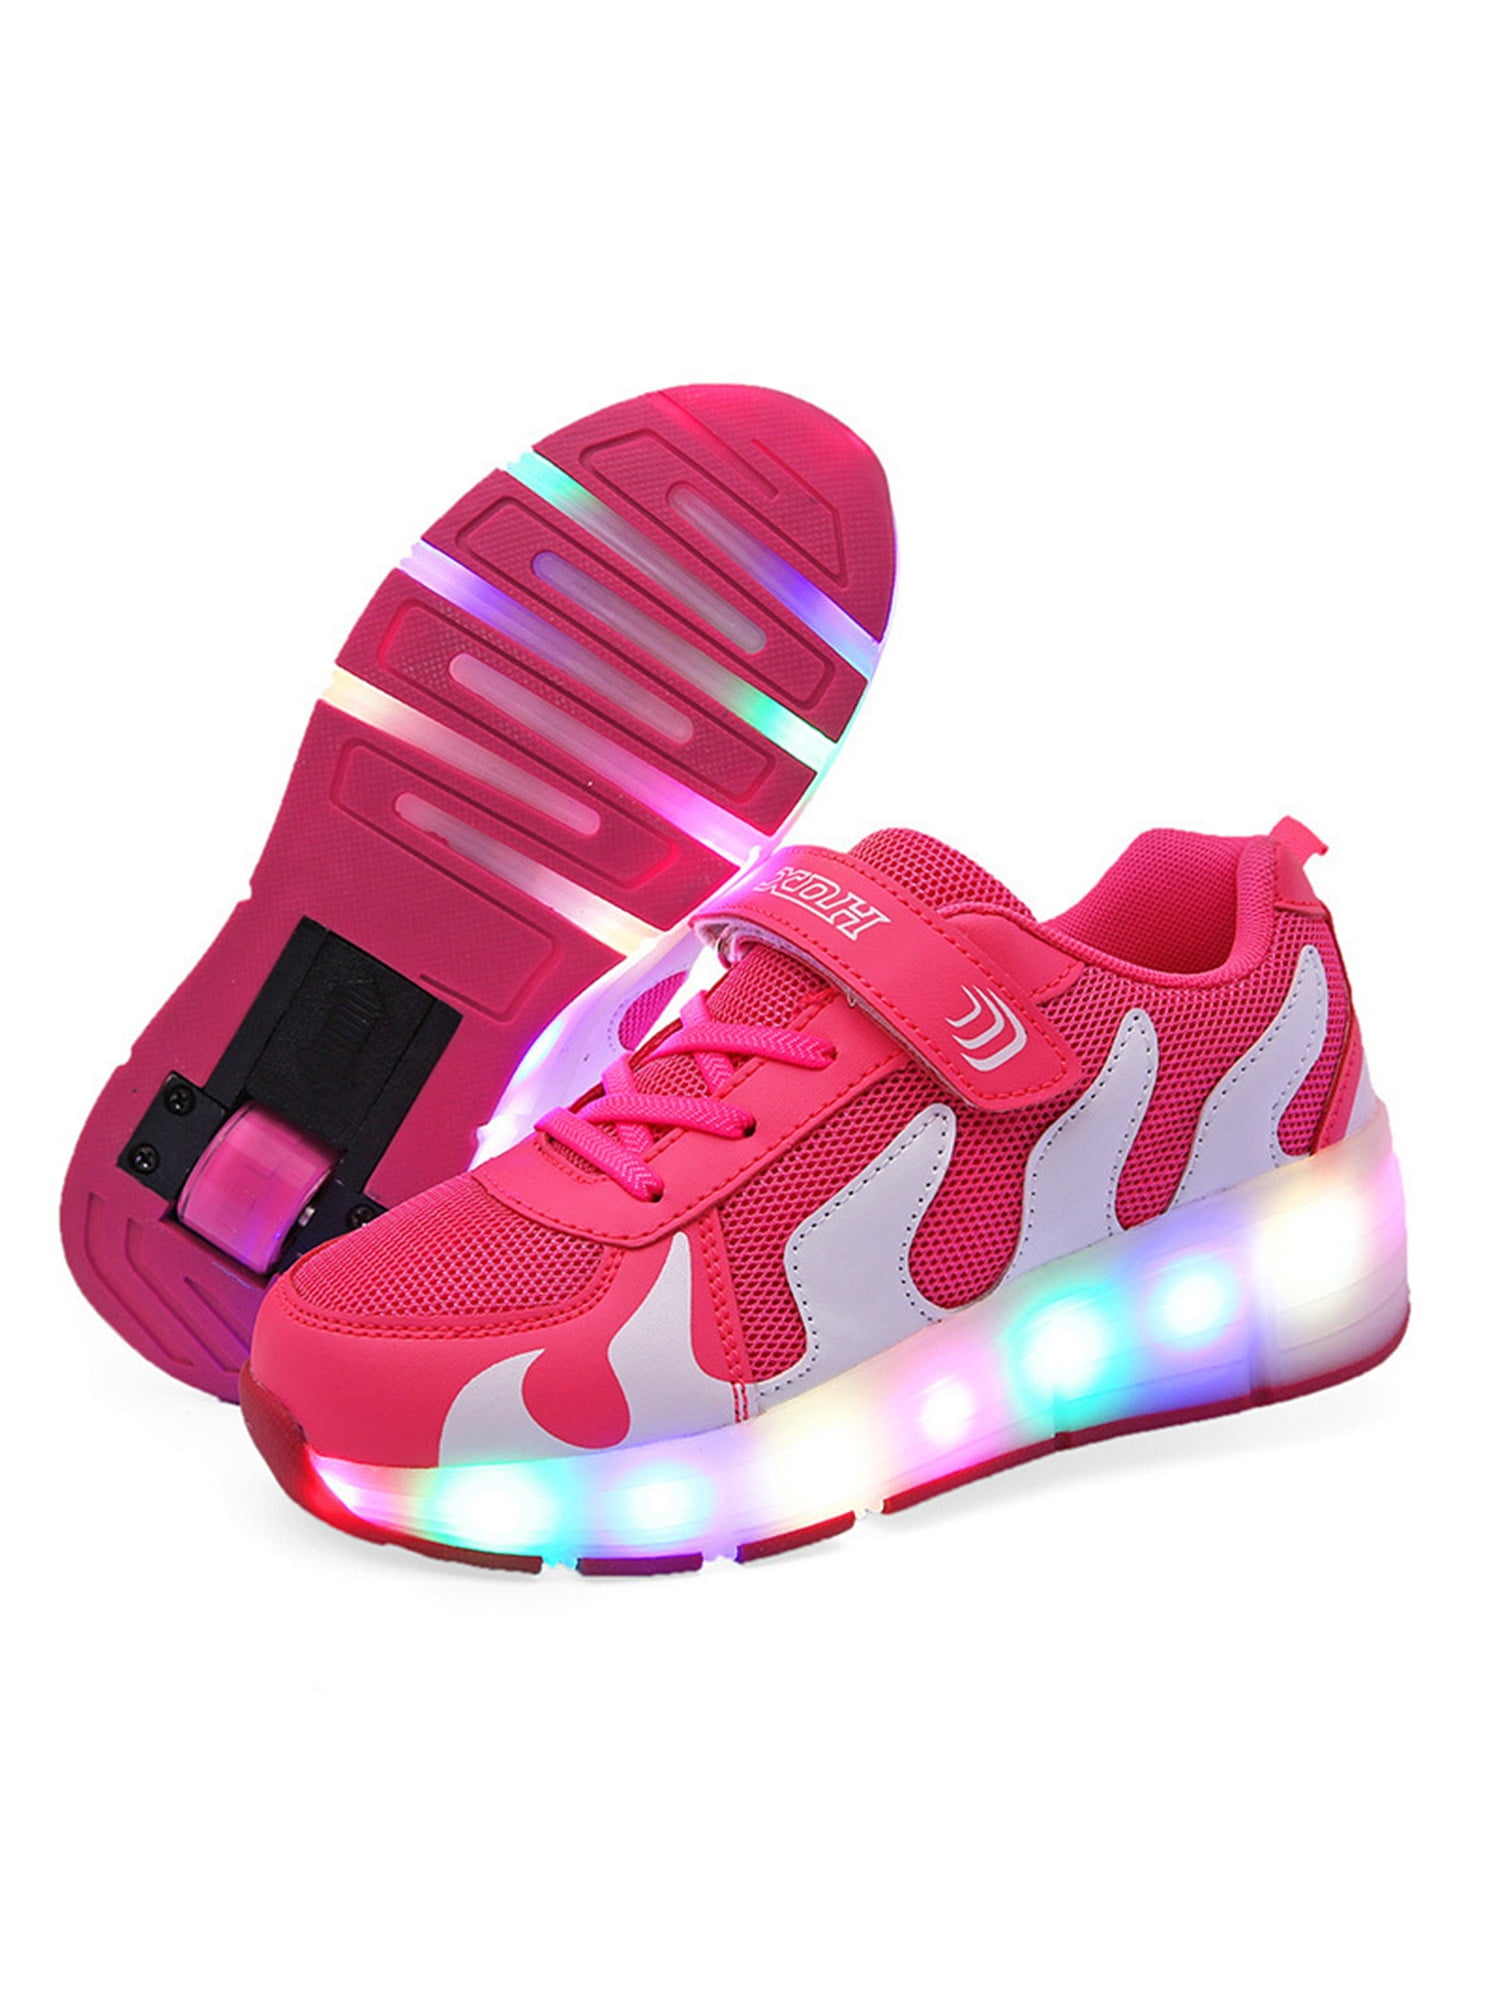 Kids LED Single Wheels Shoes Lights Up Sneakers Roller Wheel Skate Flashing Shoes